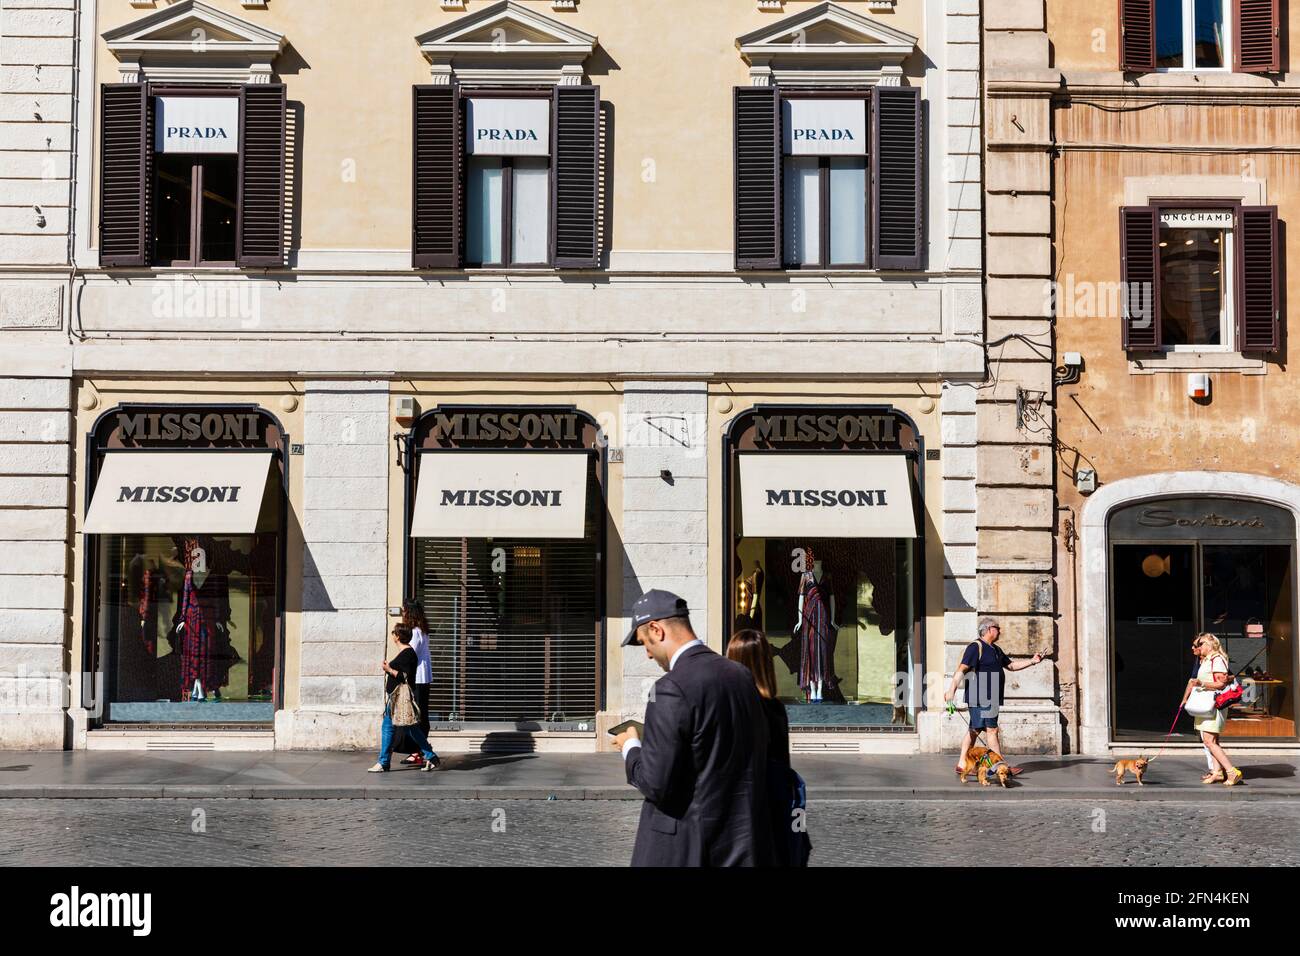 Prada and Missoni luxury fashion stores, Piazza di Spagna, Rome, Italy. Stock Photo